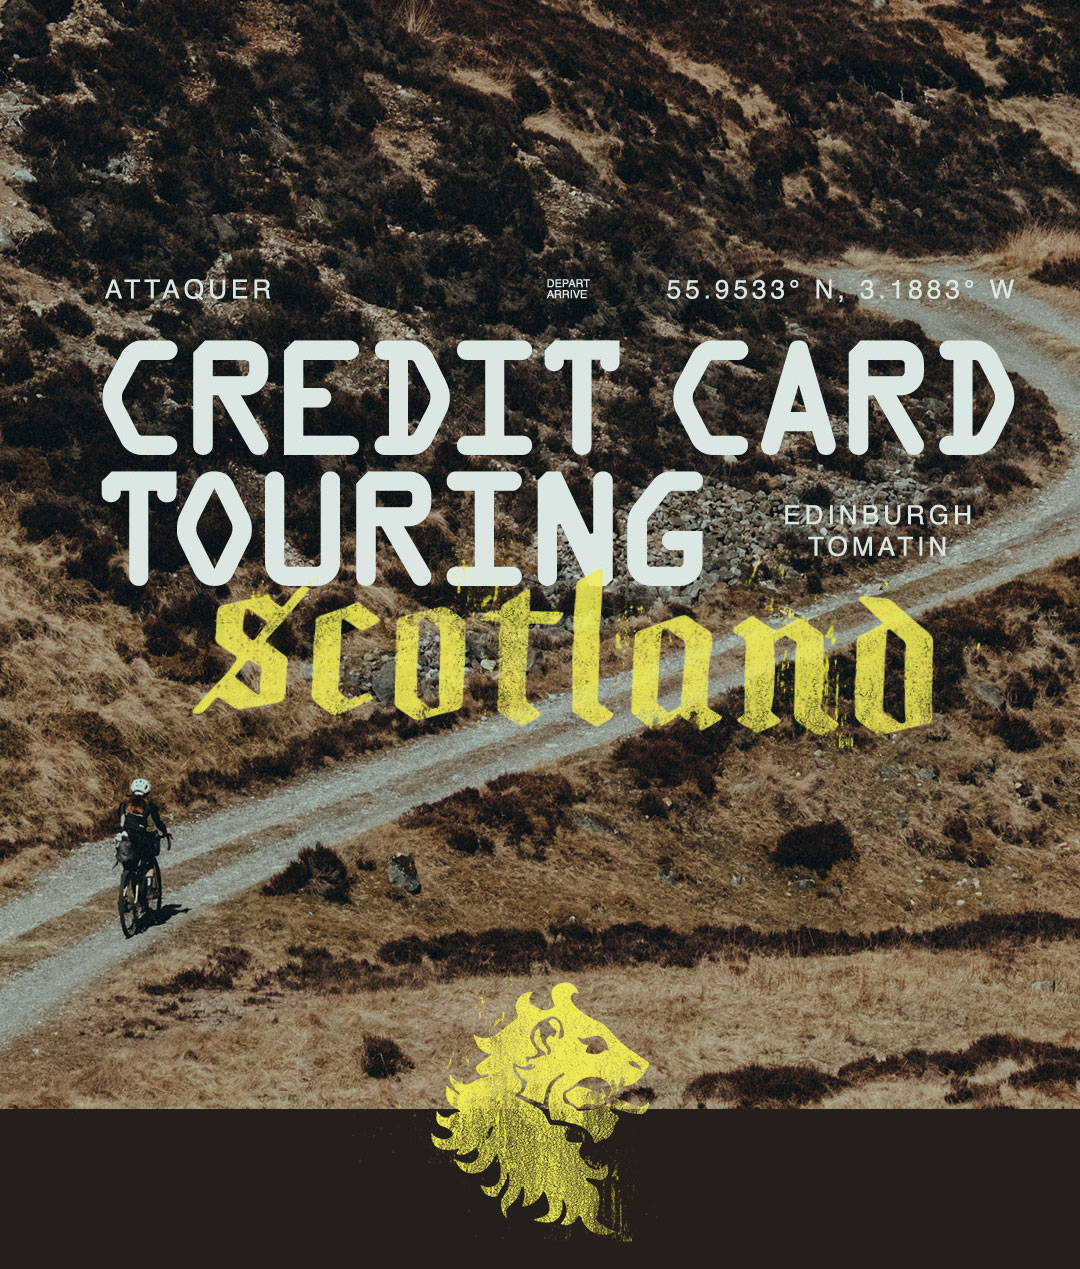 Attaquer Cycling Clothing Scotland Adventure